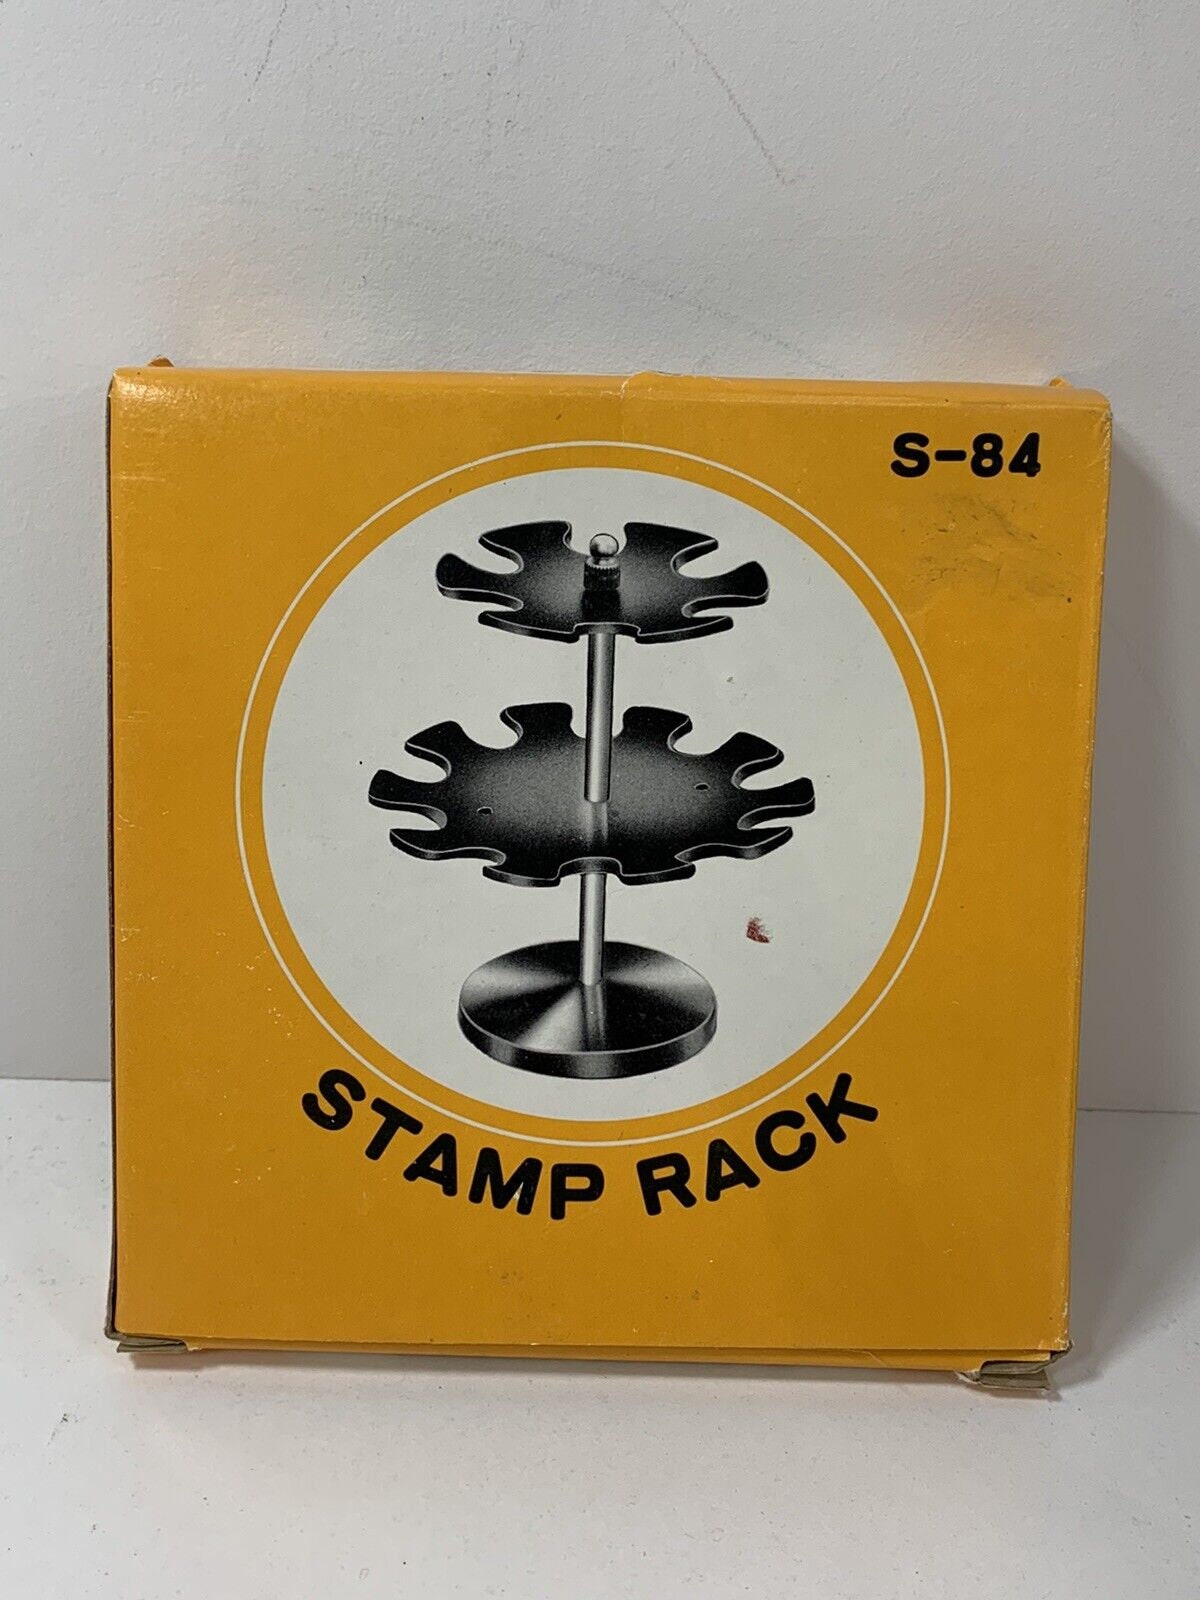 Stamp Rack-14